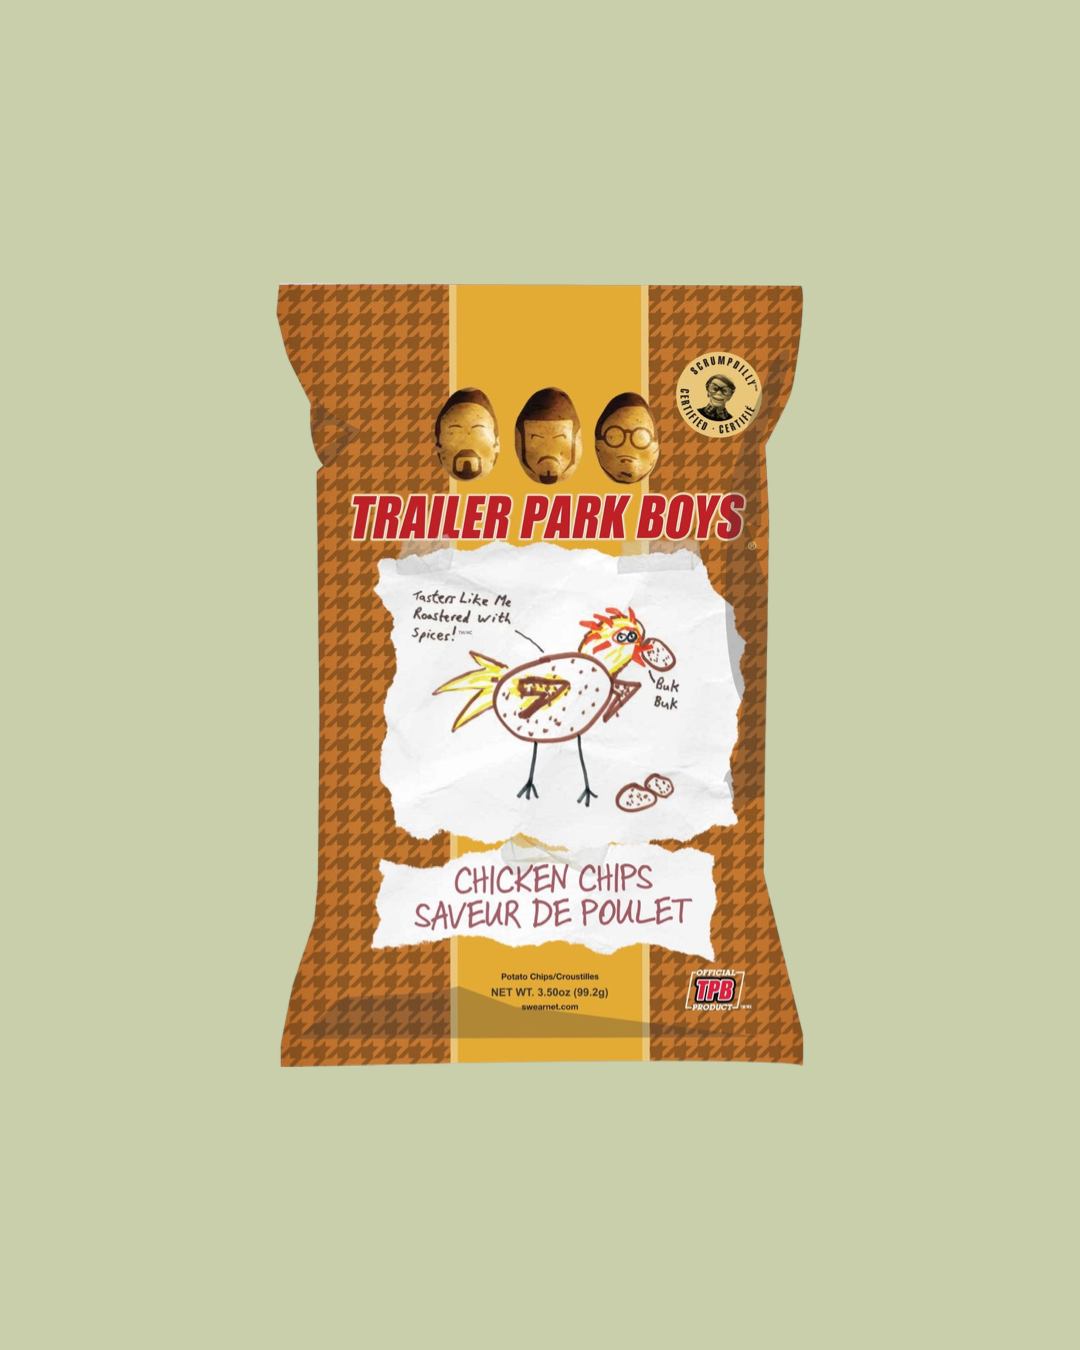 Trailer Park Boys Chicken Chips